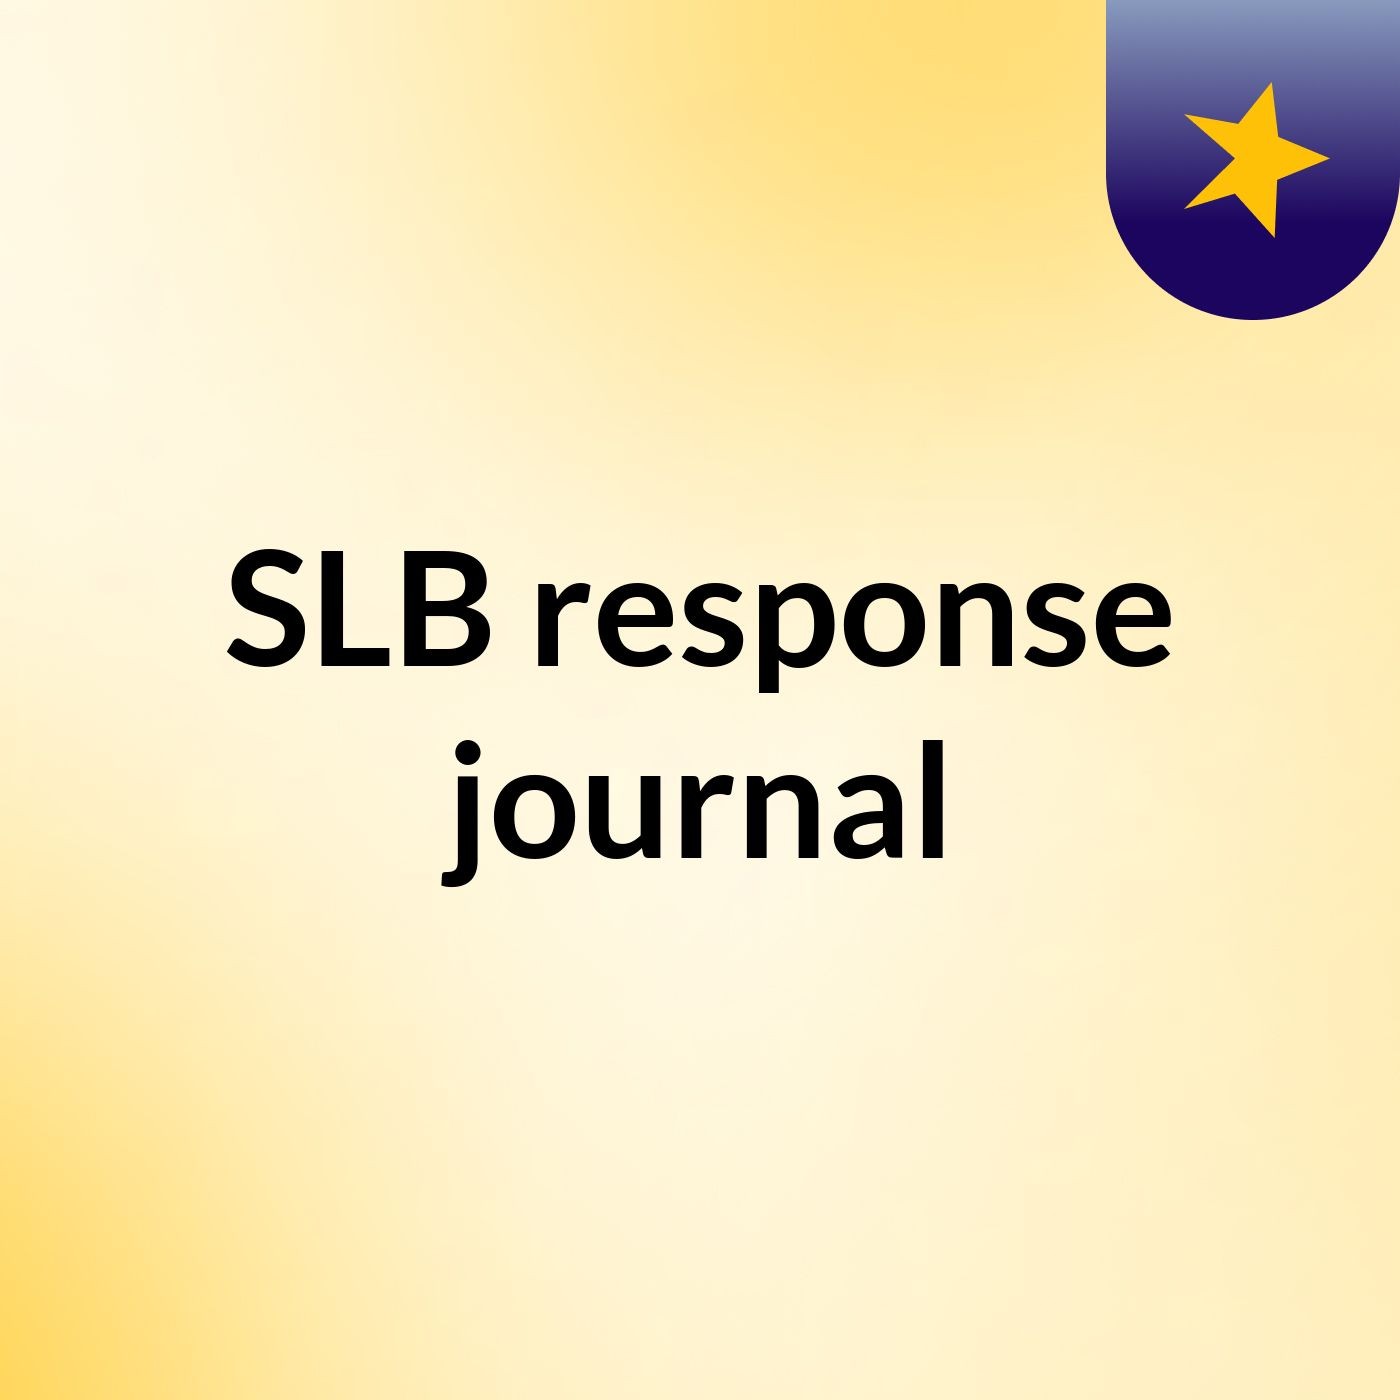 SLB response journal